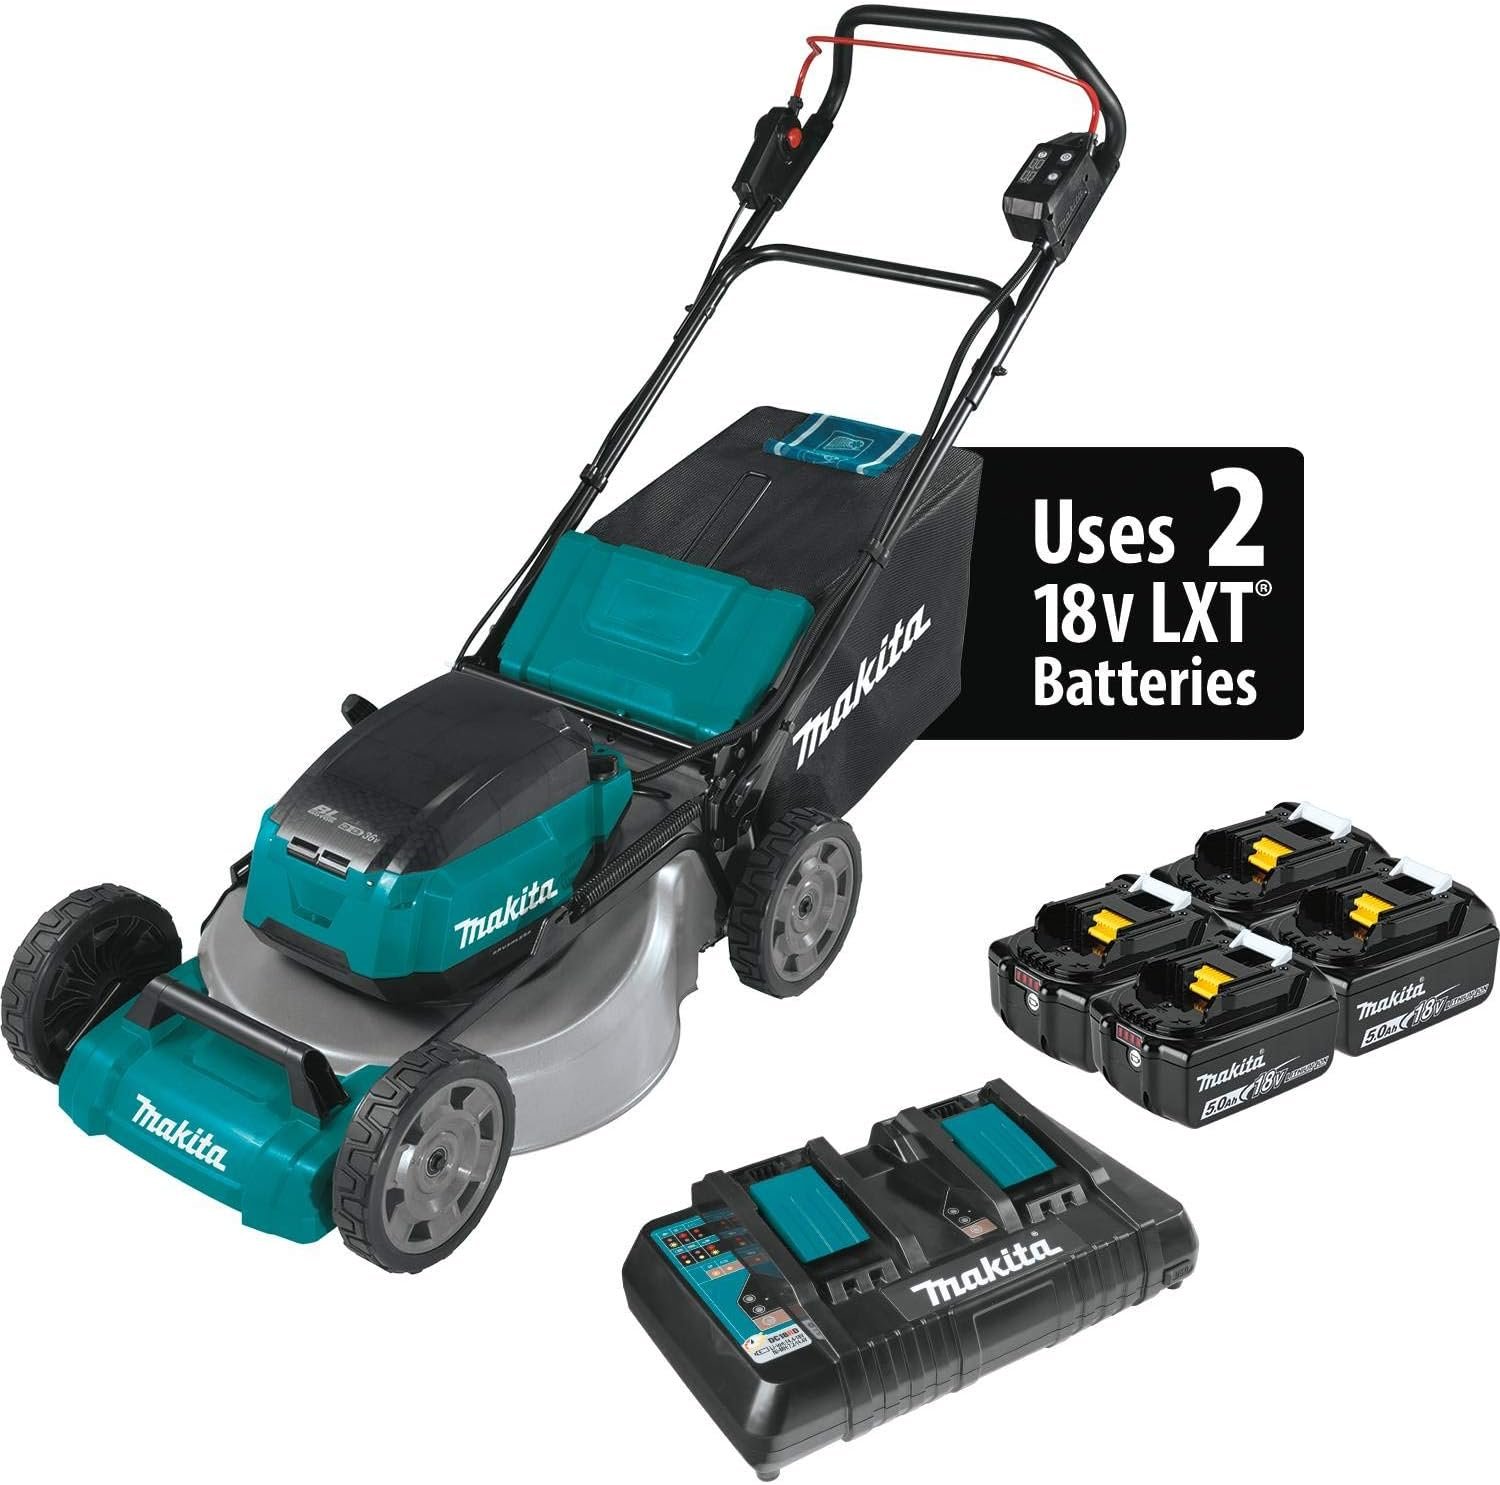 Makita 36V Commercial Lawn Mower Kit 4 Batteries Review